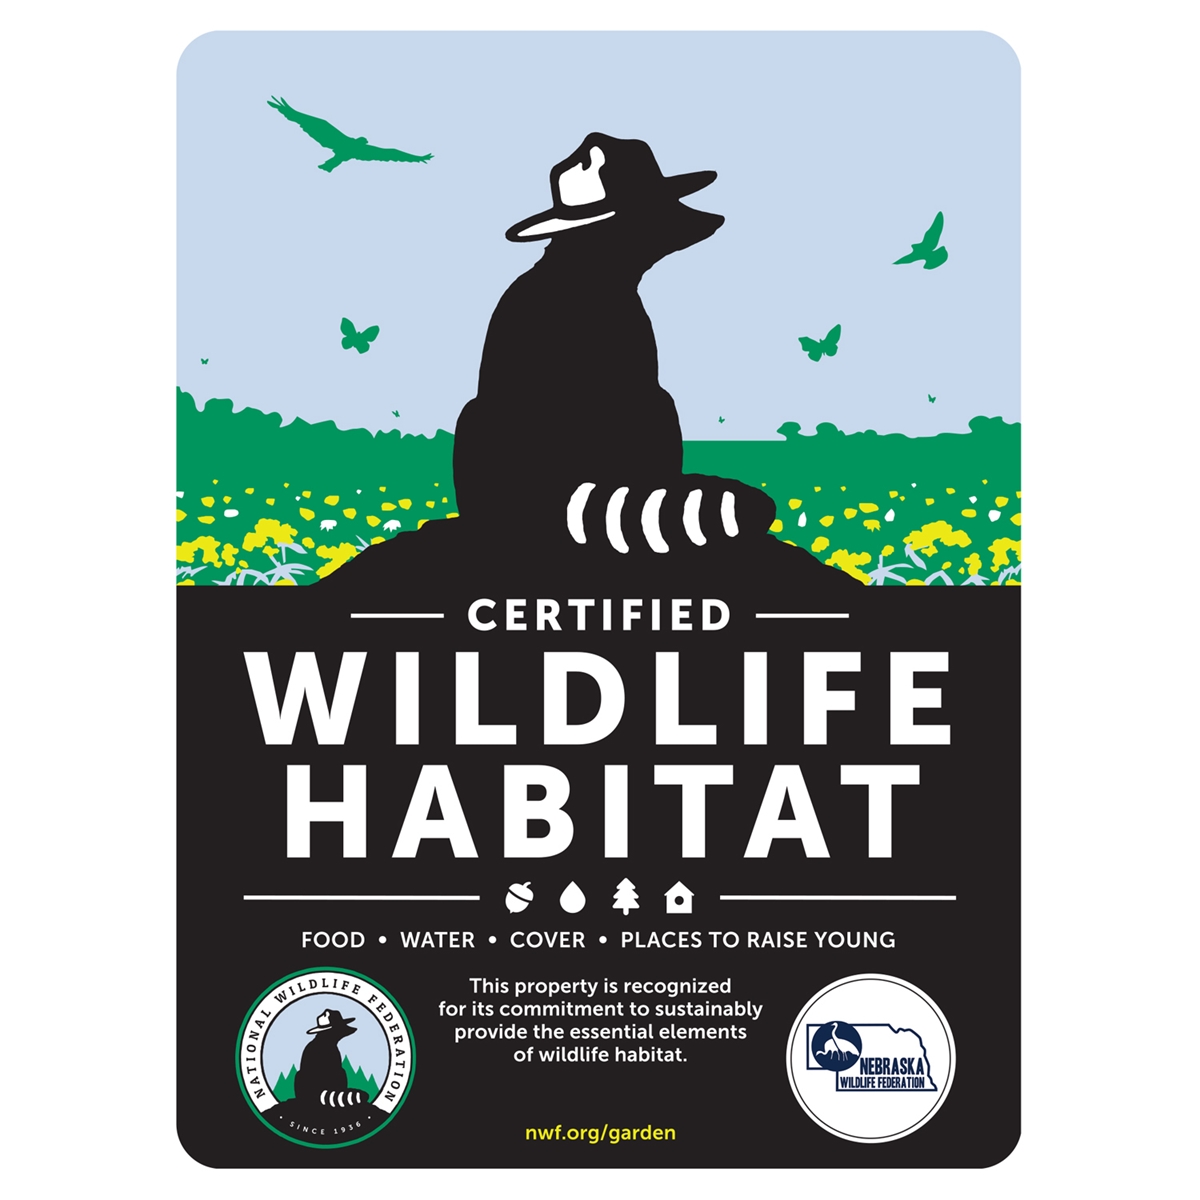 Nebraska Wildlife Federation Certified Wildlife Habitat Sign